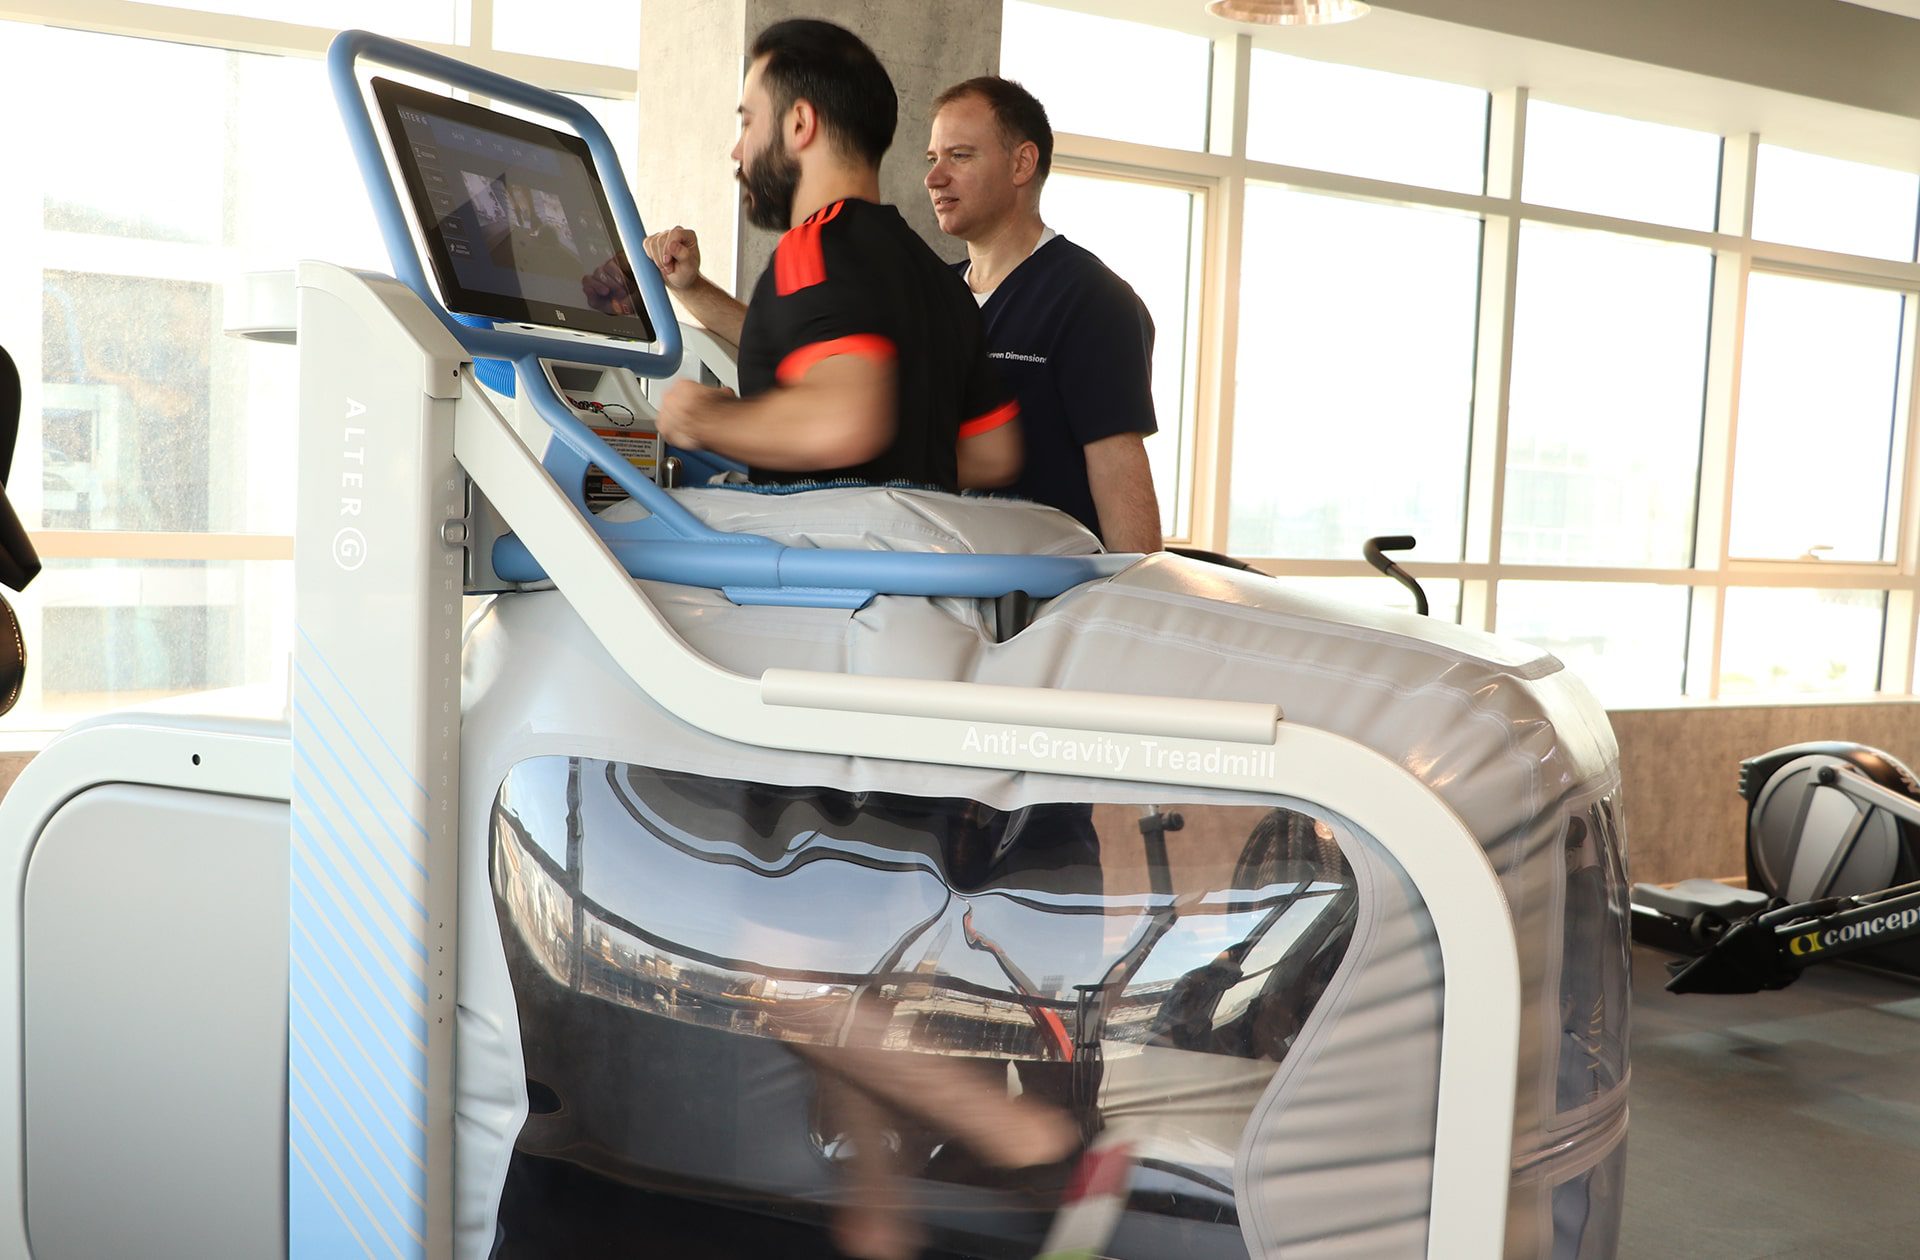 Alterg Anti Gravity Treadmill For Rehab 7dmc Dubai